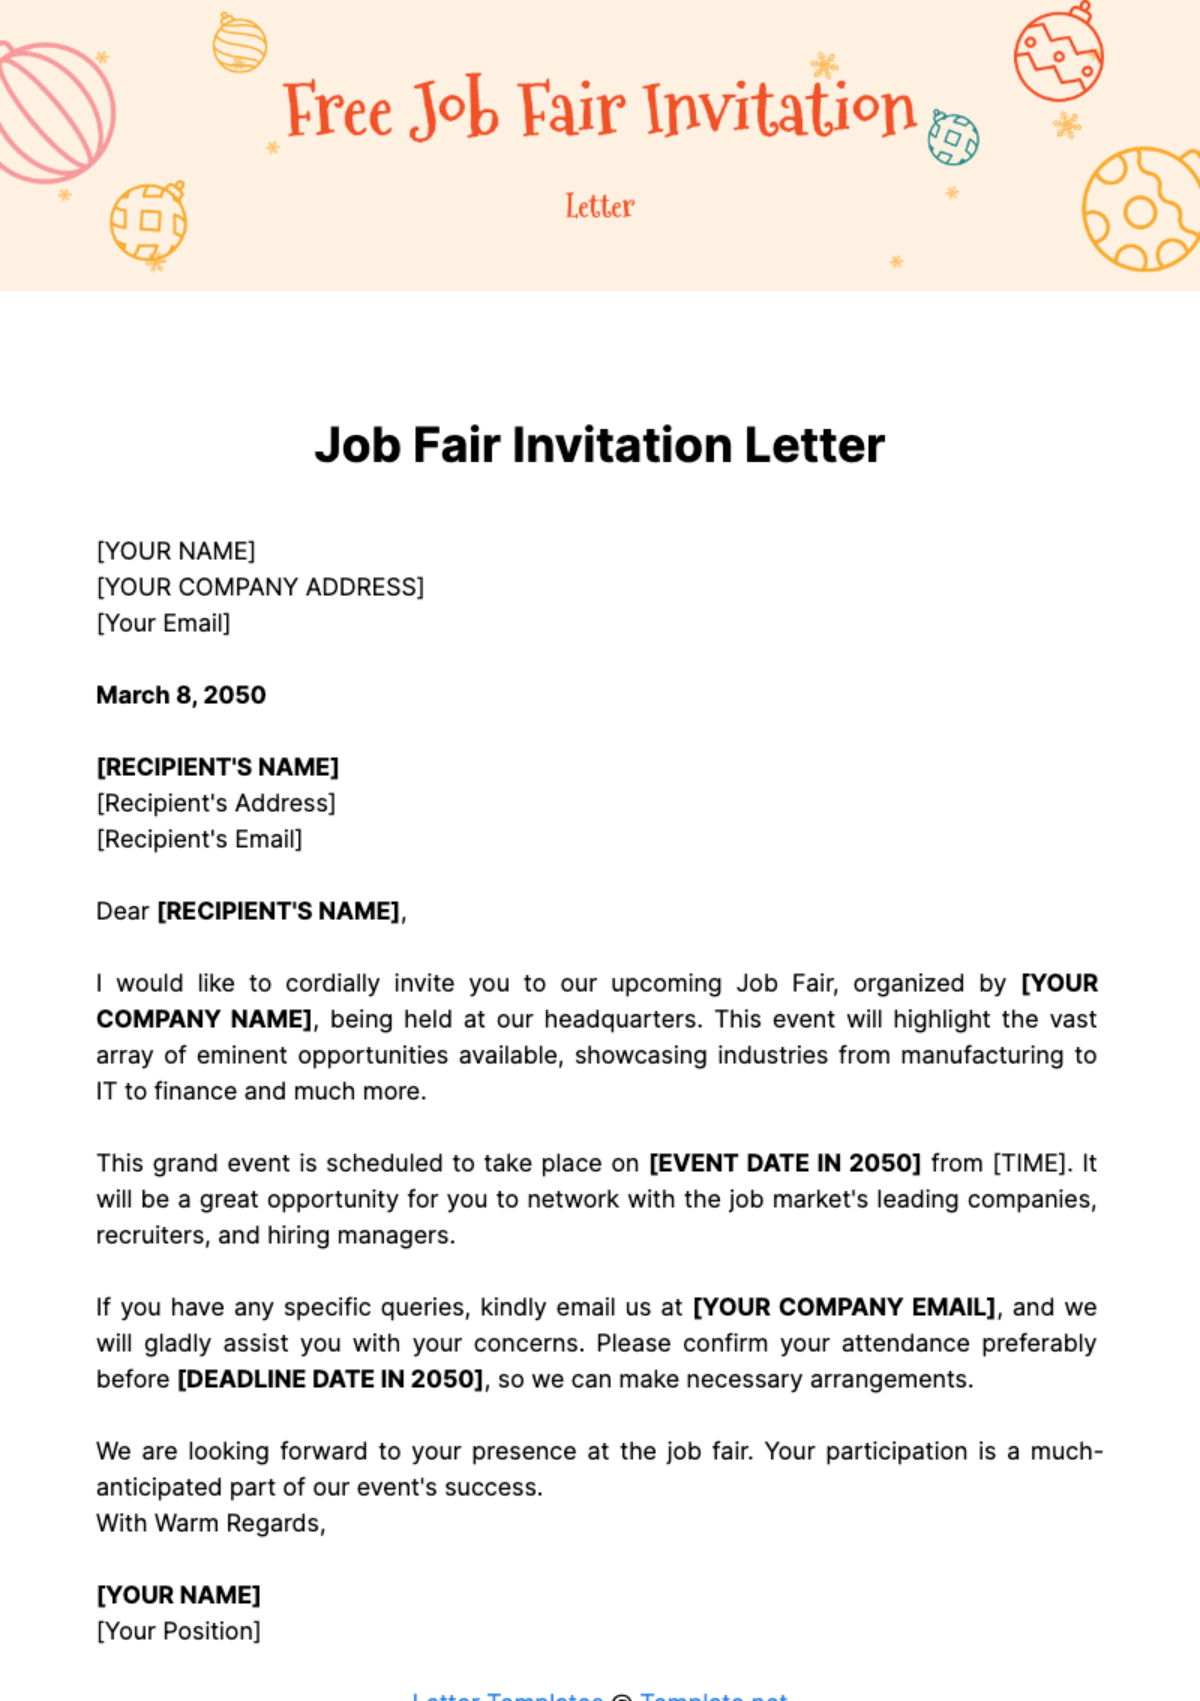 Free Job Fair Invitation Letter Template